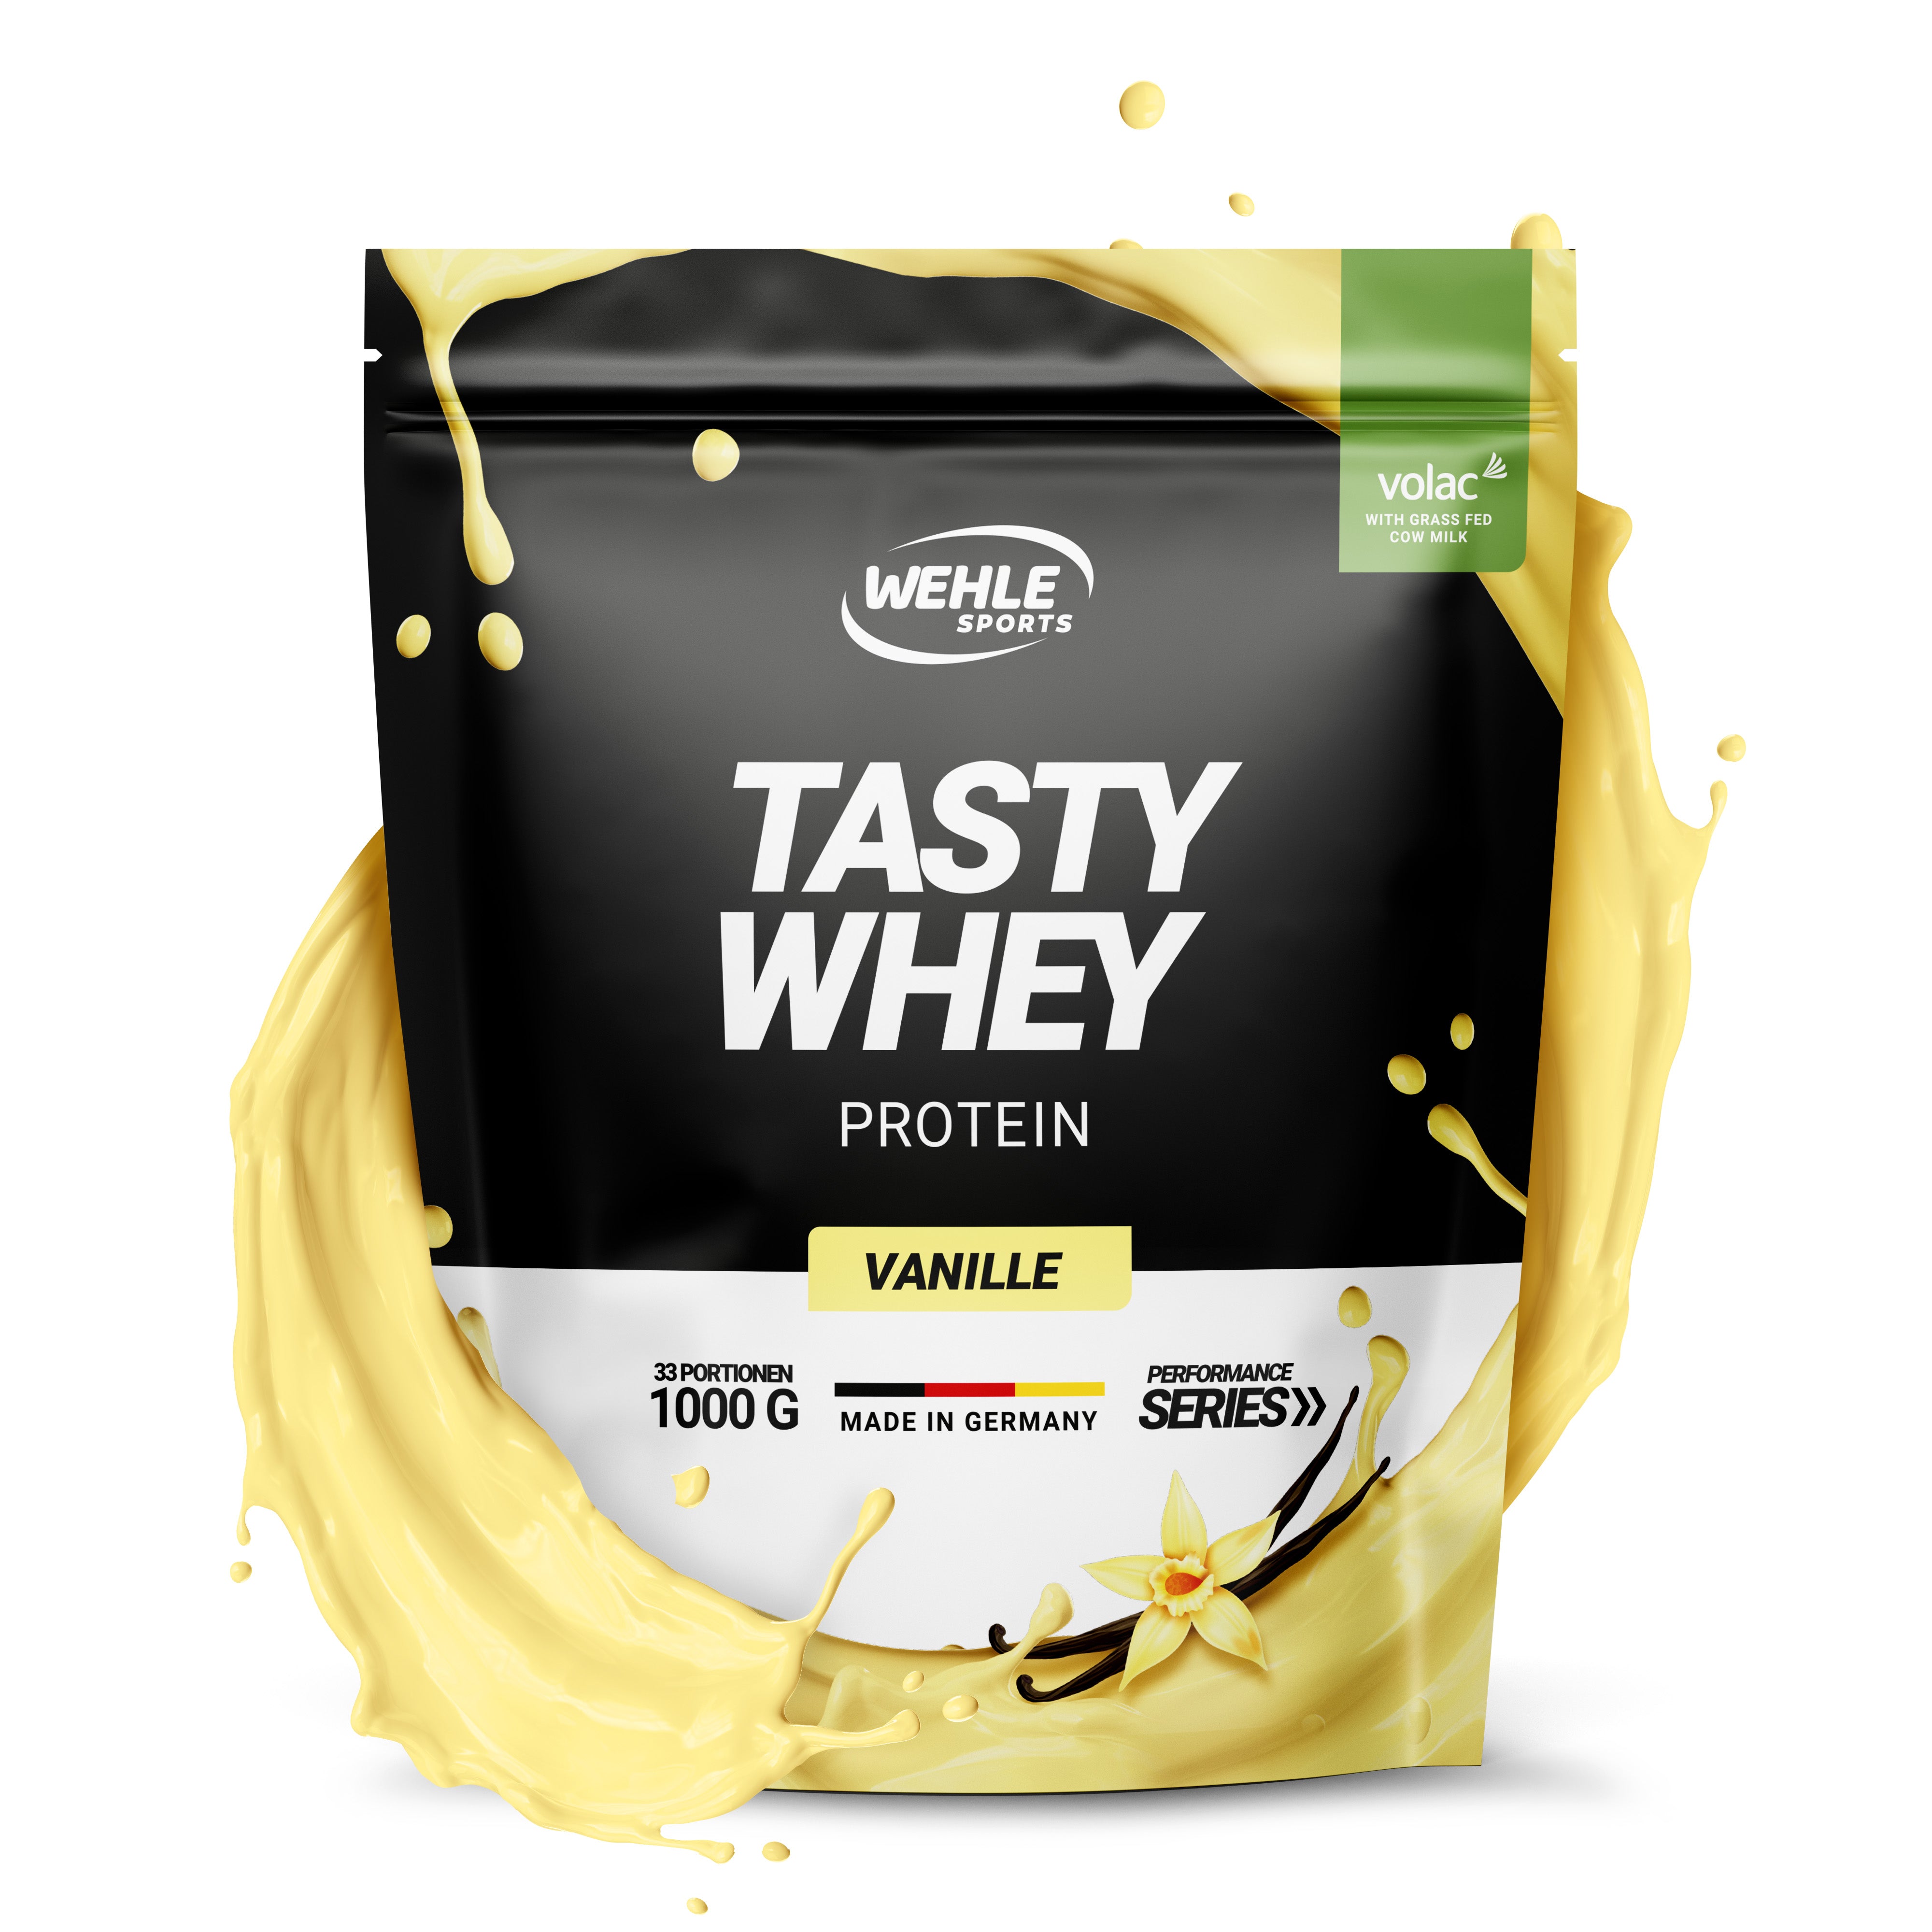 Wehle Sports Tasty Whey Protein - 1000g